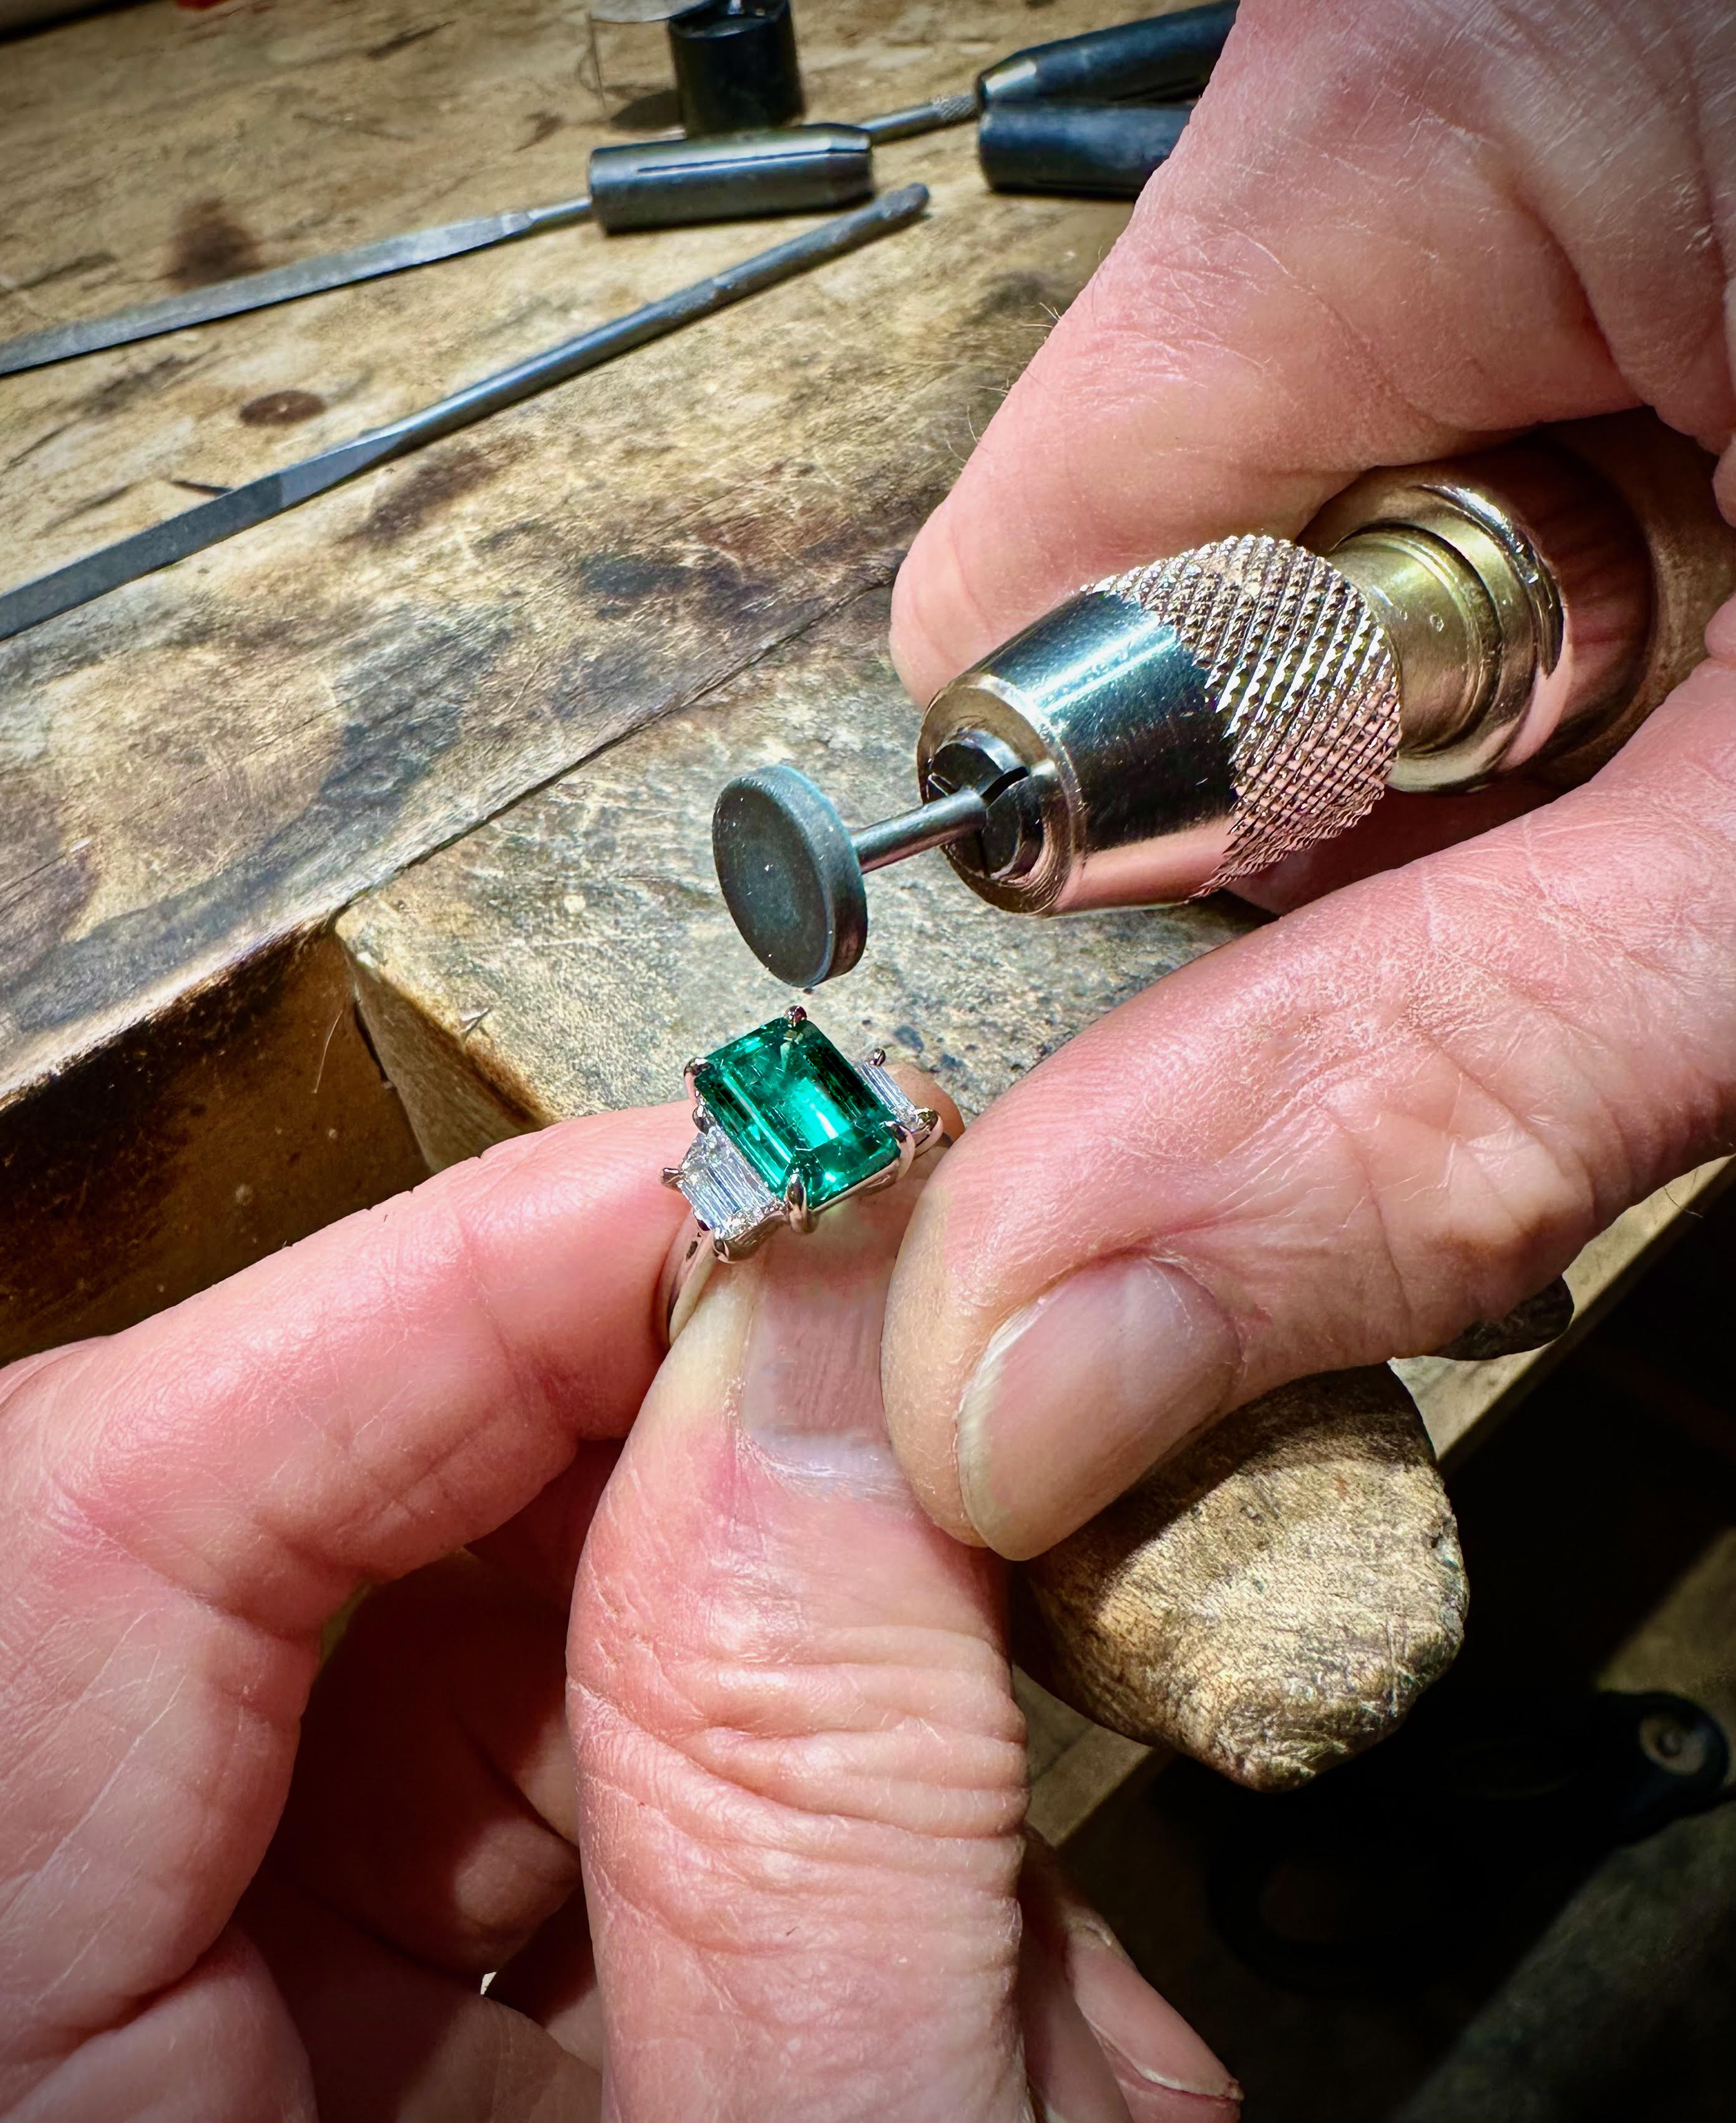 Jeweler polishing emerald ring at workbench.